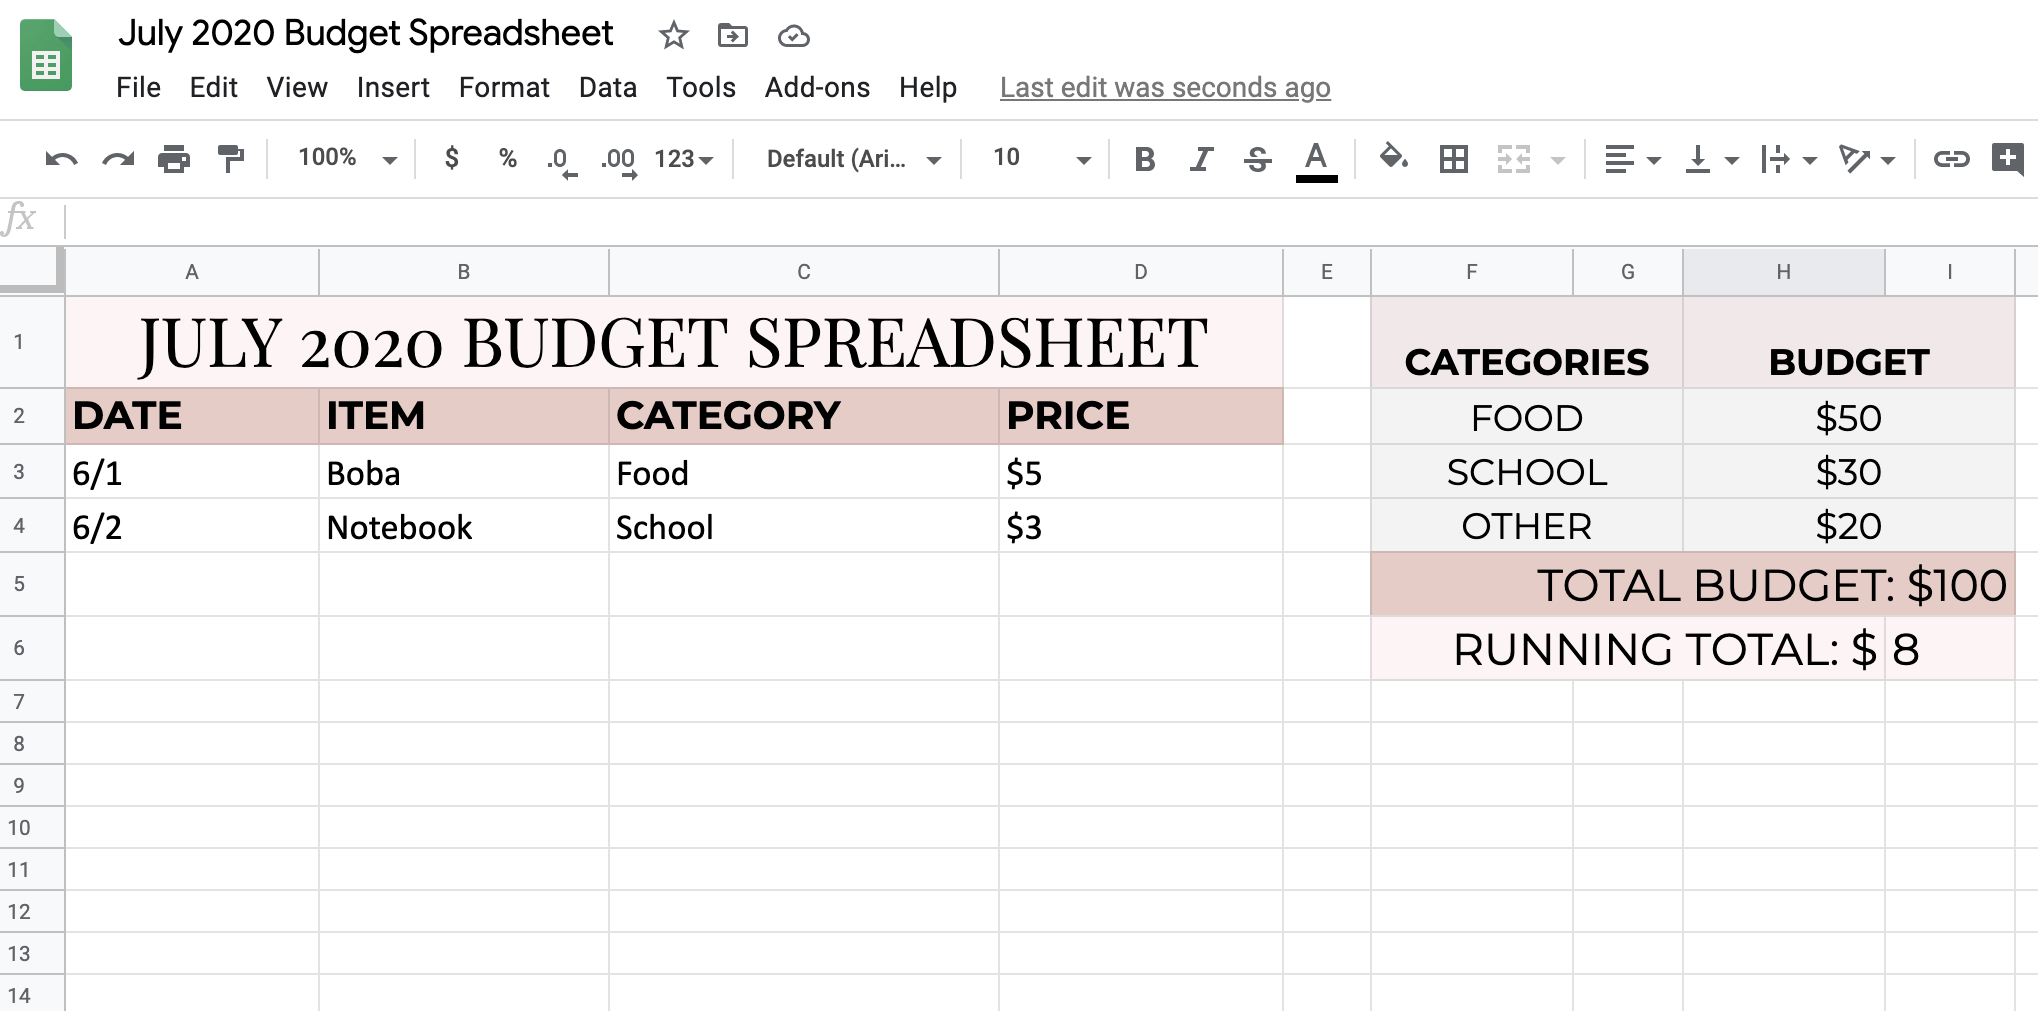 example of budget spreadsheet on saving money